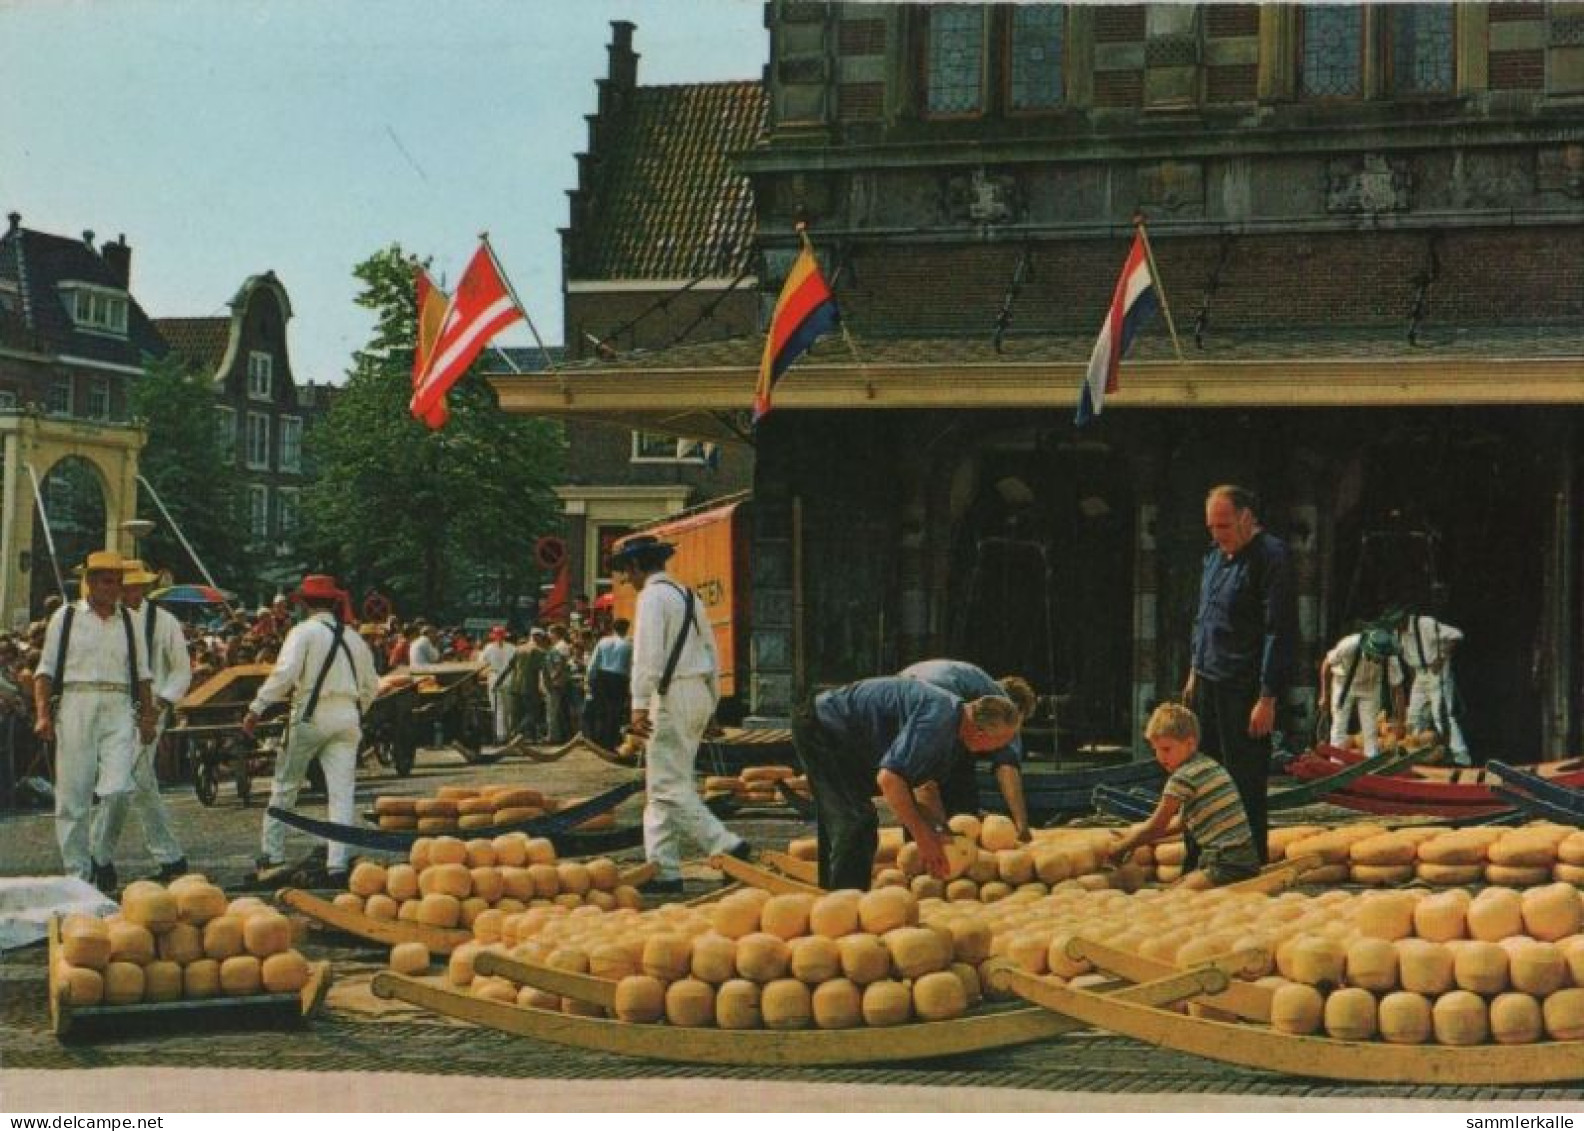 103829 - Niederlande - Alkmaar - Käsemarkt (Rücksite Ohne Adressteilung) - Ca. 1980 - Alkmaar